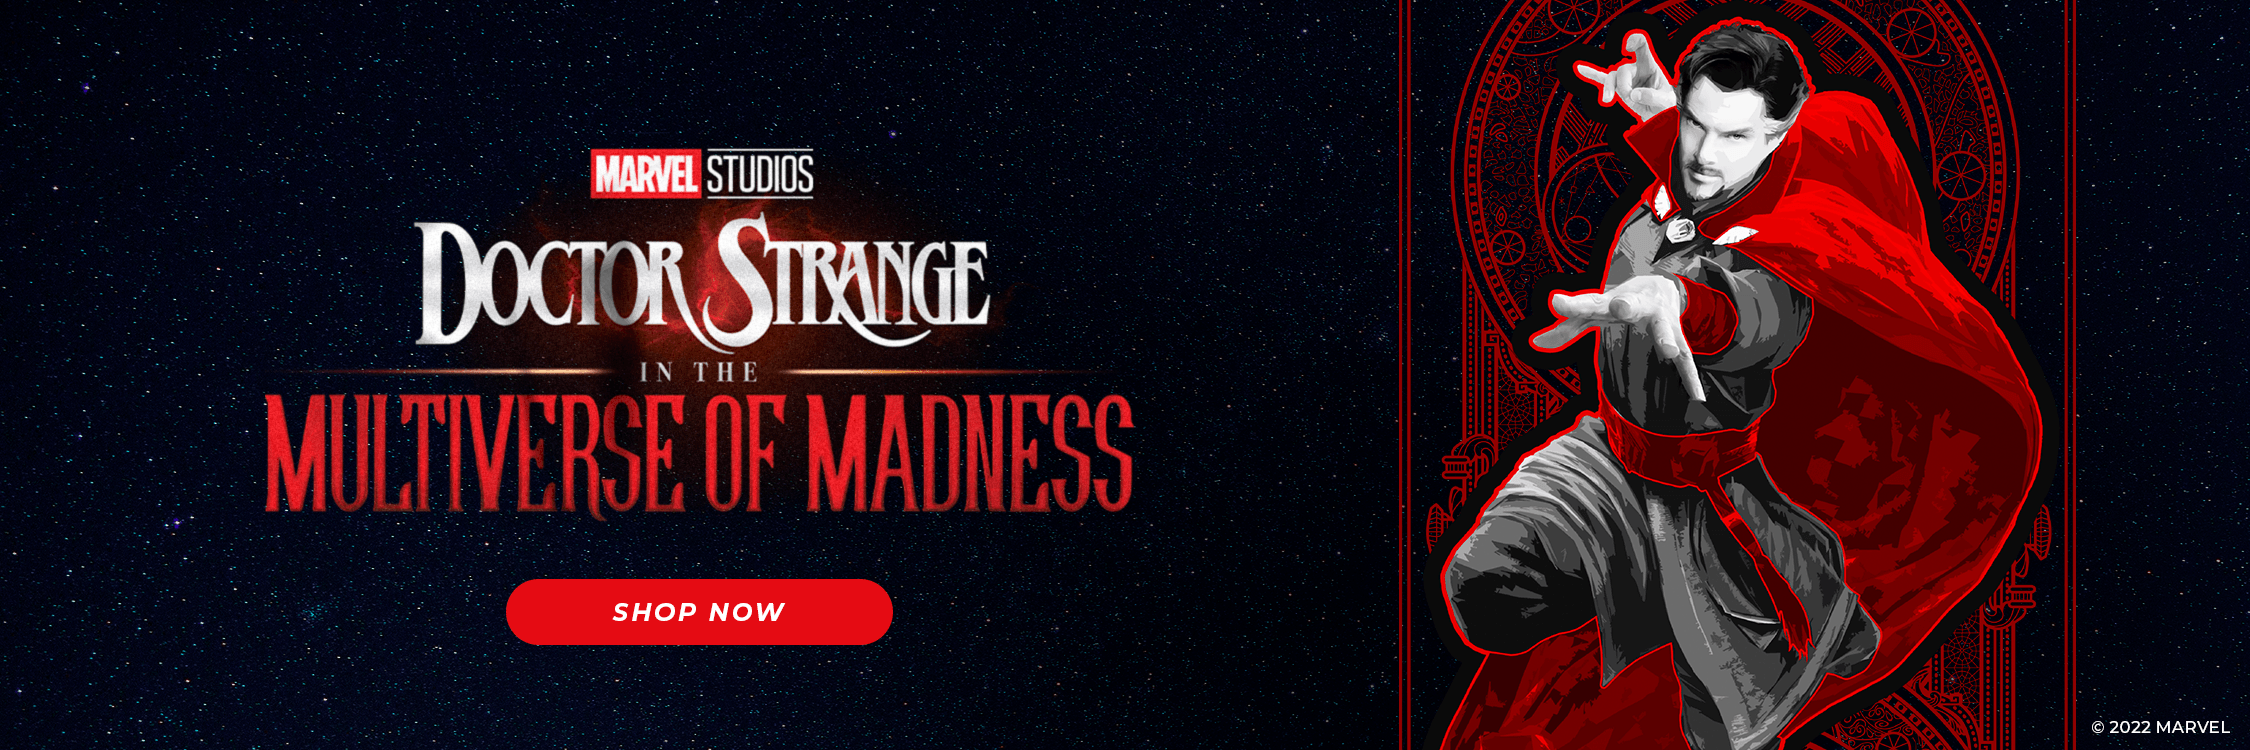 Marvel Studios Doctor Strange in the Multiverse of madness. Shop now. Doctor Strange on starry backg